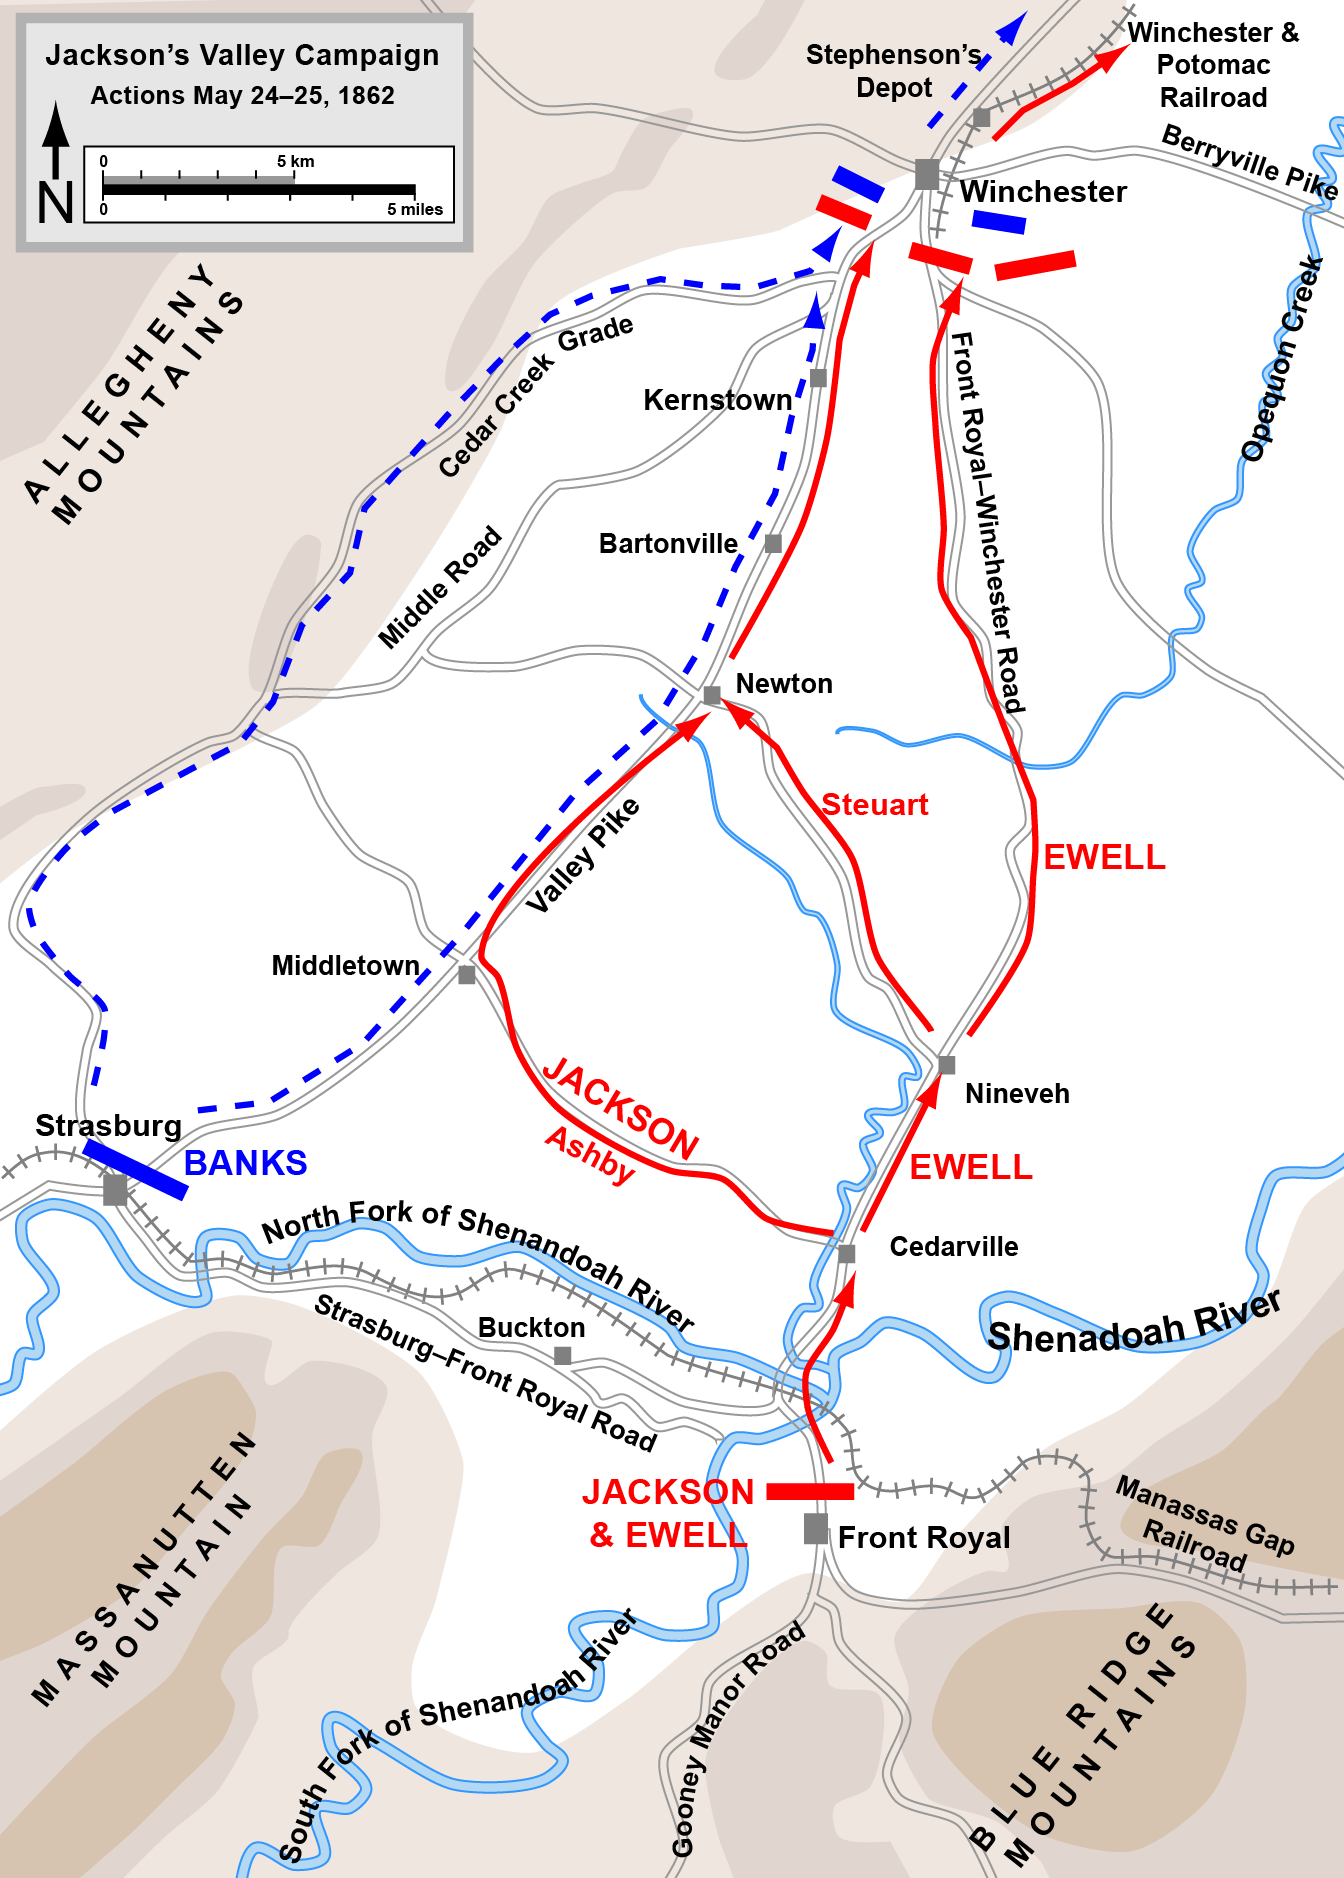 Battle of Front Royal